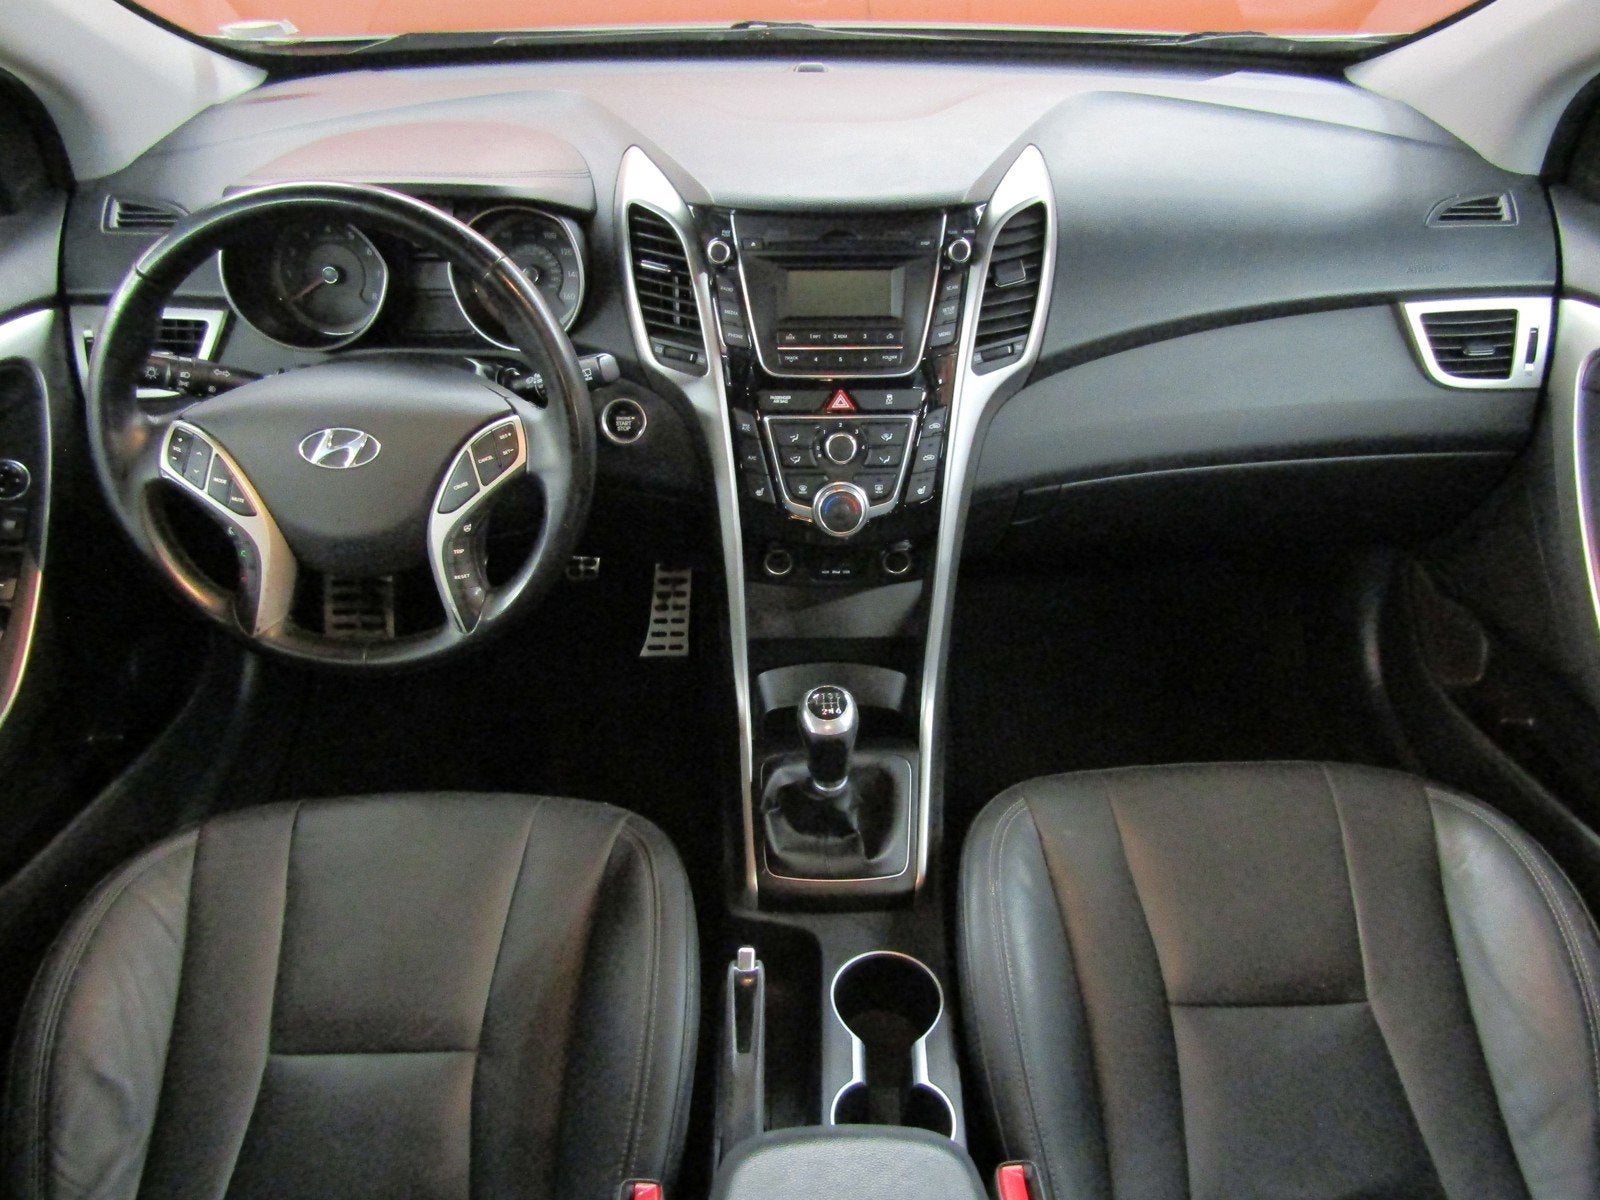 2014 Hyundai Elantra GT 5dr HB Man